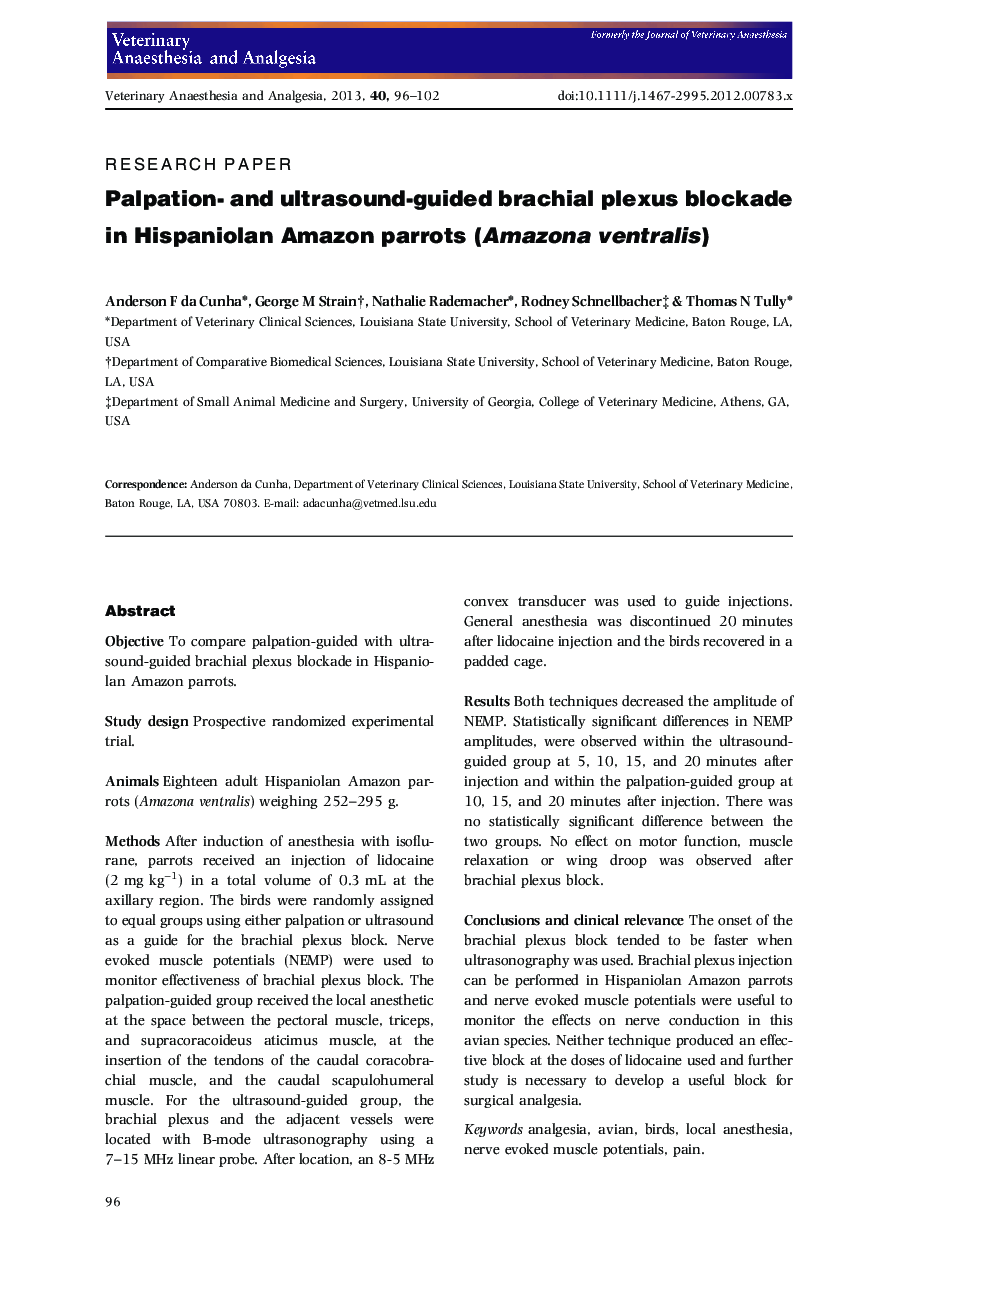 Palpation- and ultrasound-guided brachial plexus blockade in Hispaniolan Amazon parrots (Amazona ventralis)